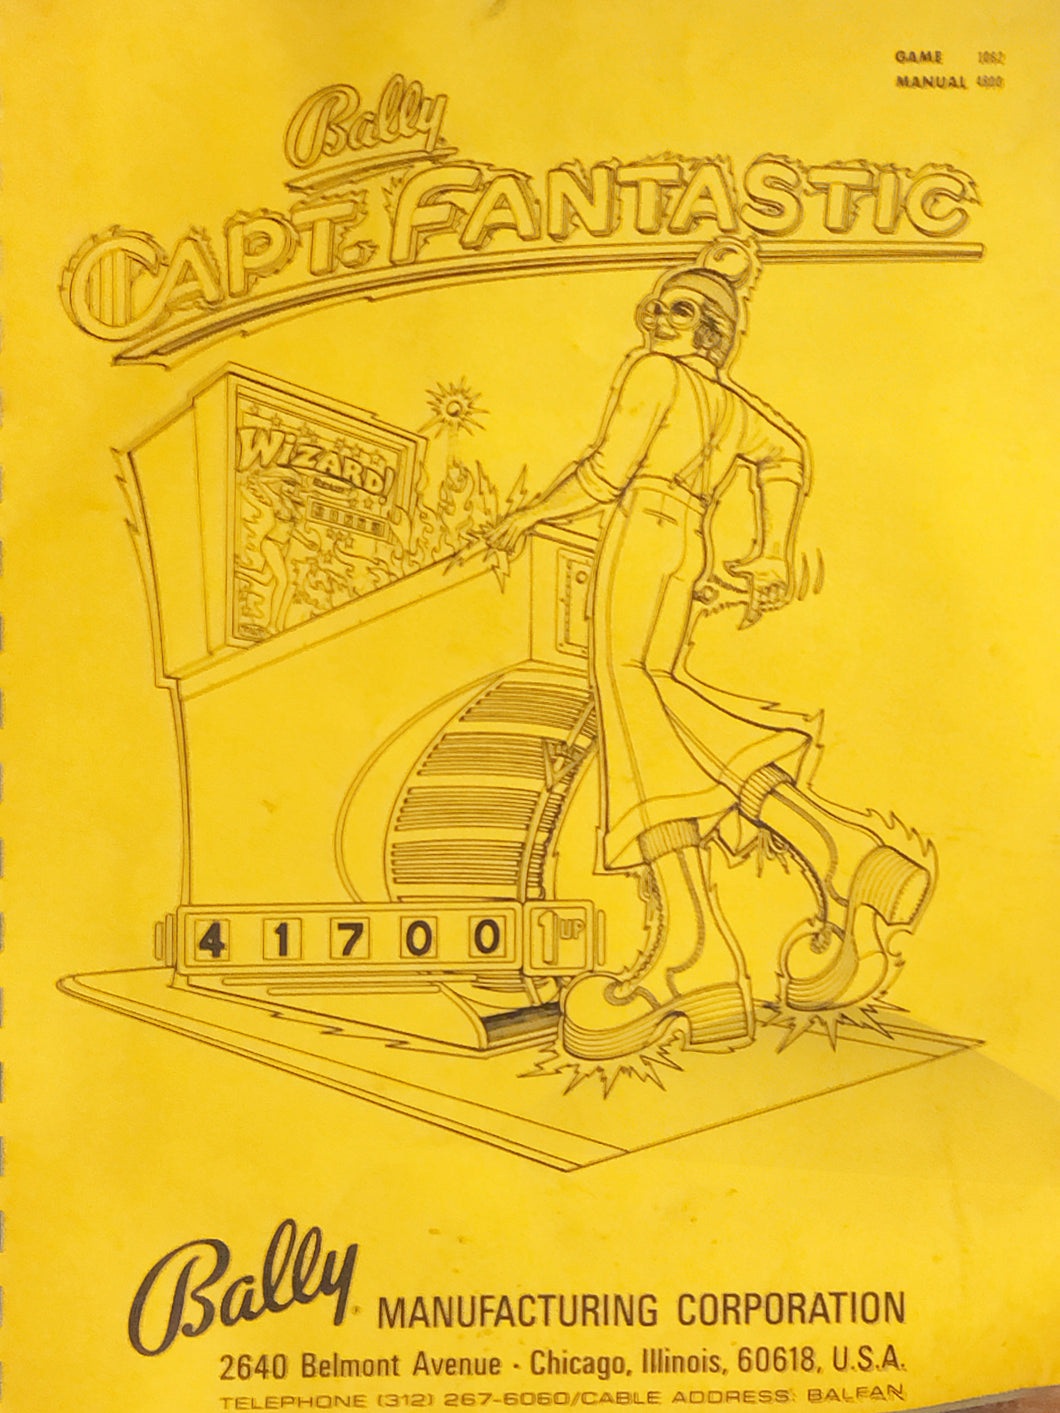 Captain Fanstastic Complete Pinball Manual